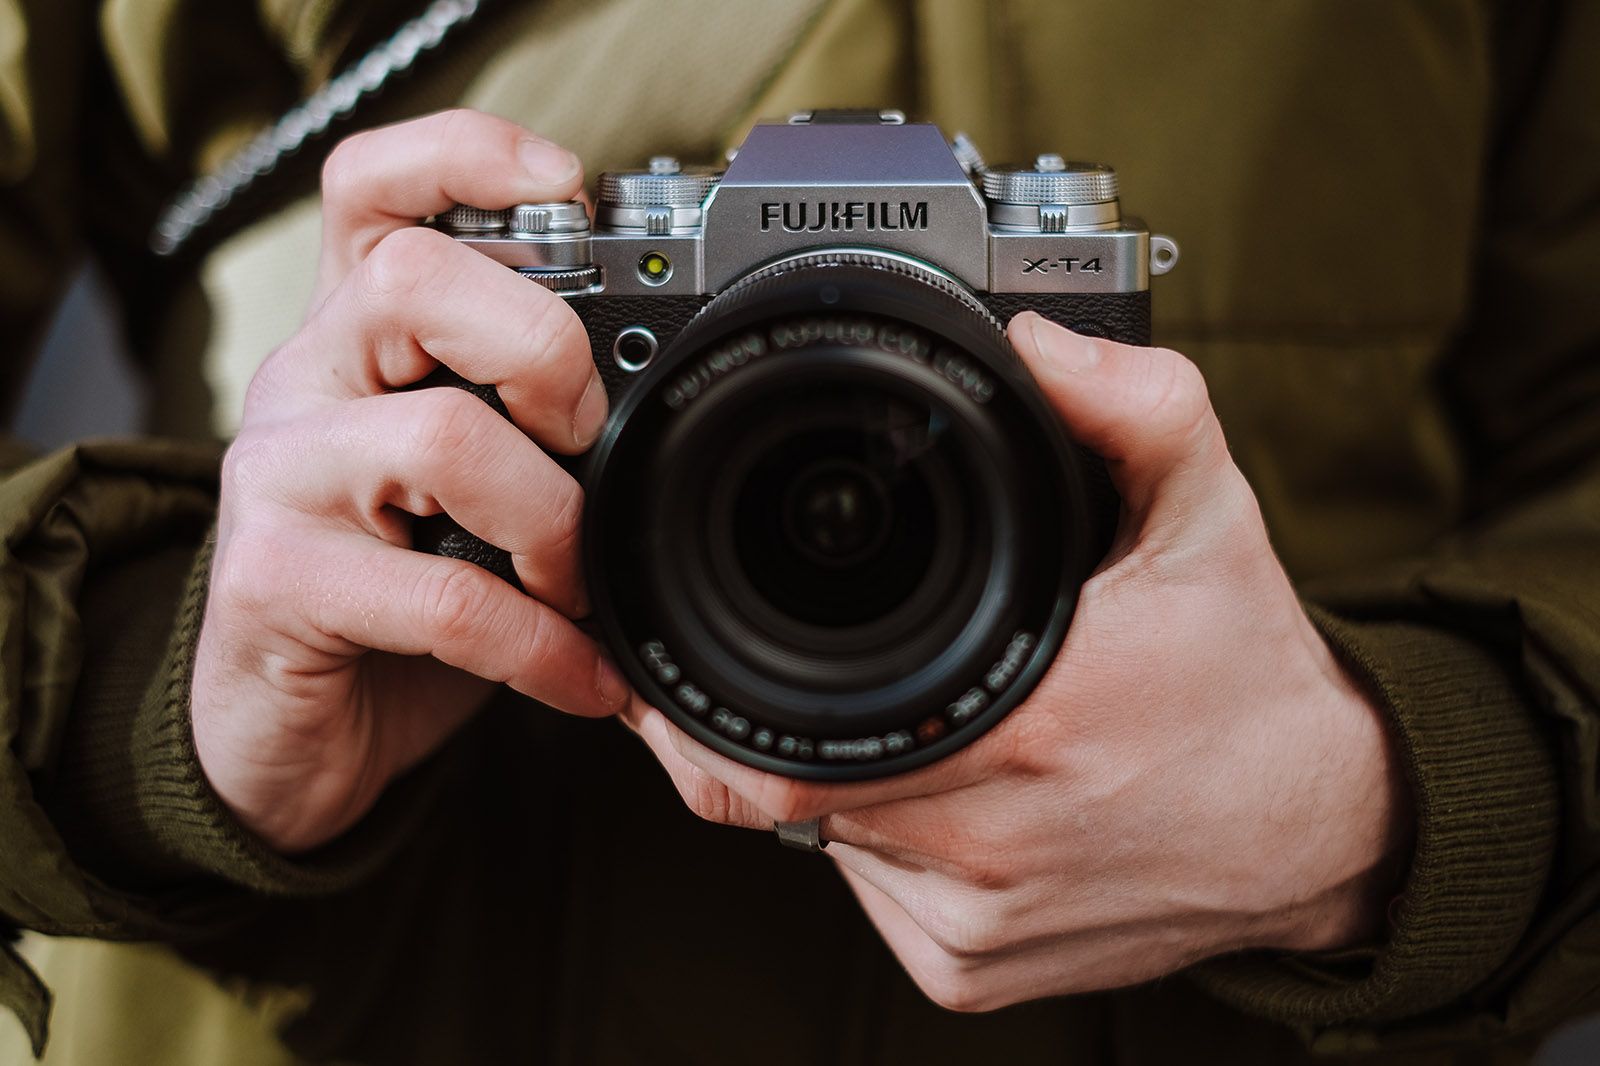 Fujifilm X-T4 mirrorless camera image 1